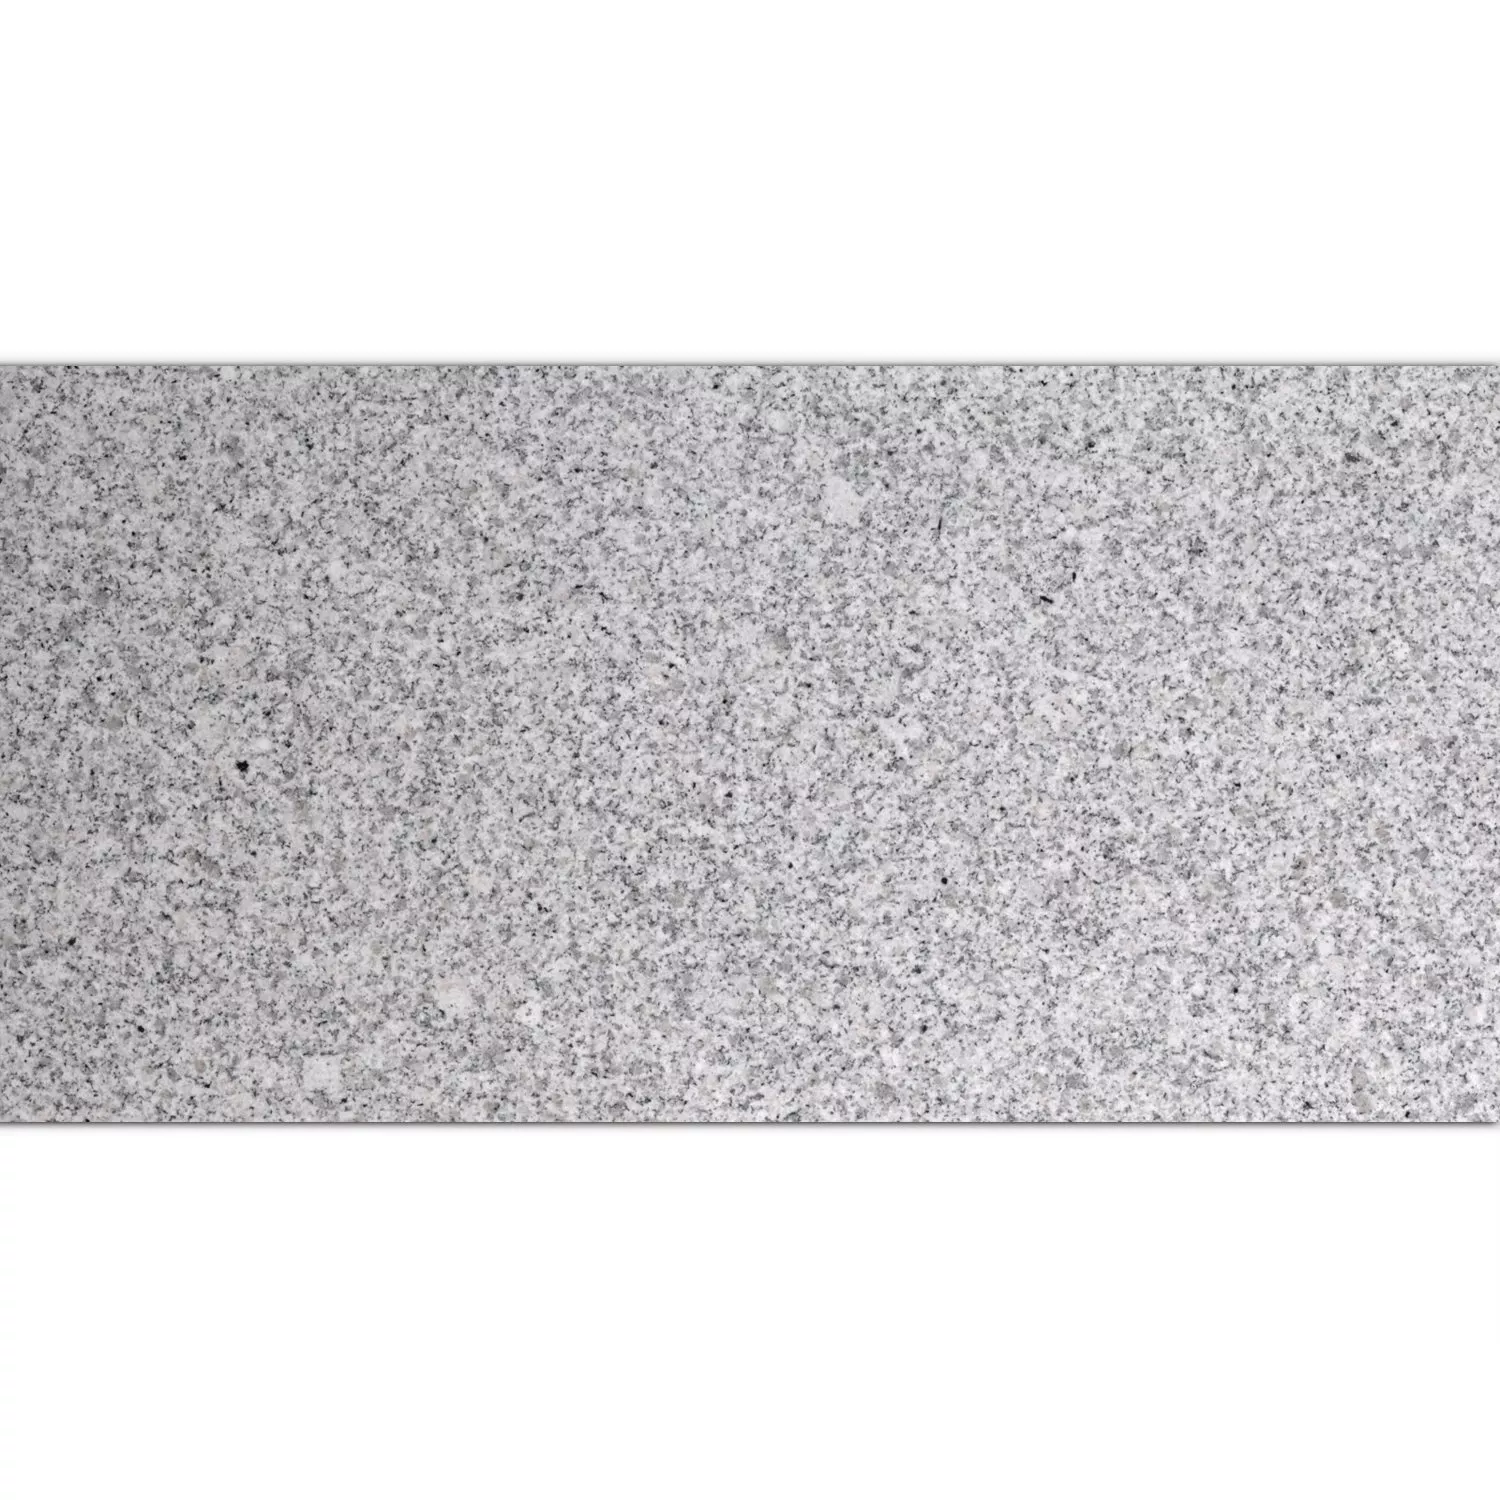 Carreaux Pierre Naturelle Granit China Grey Poli Brillant 30,5x61cm